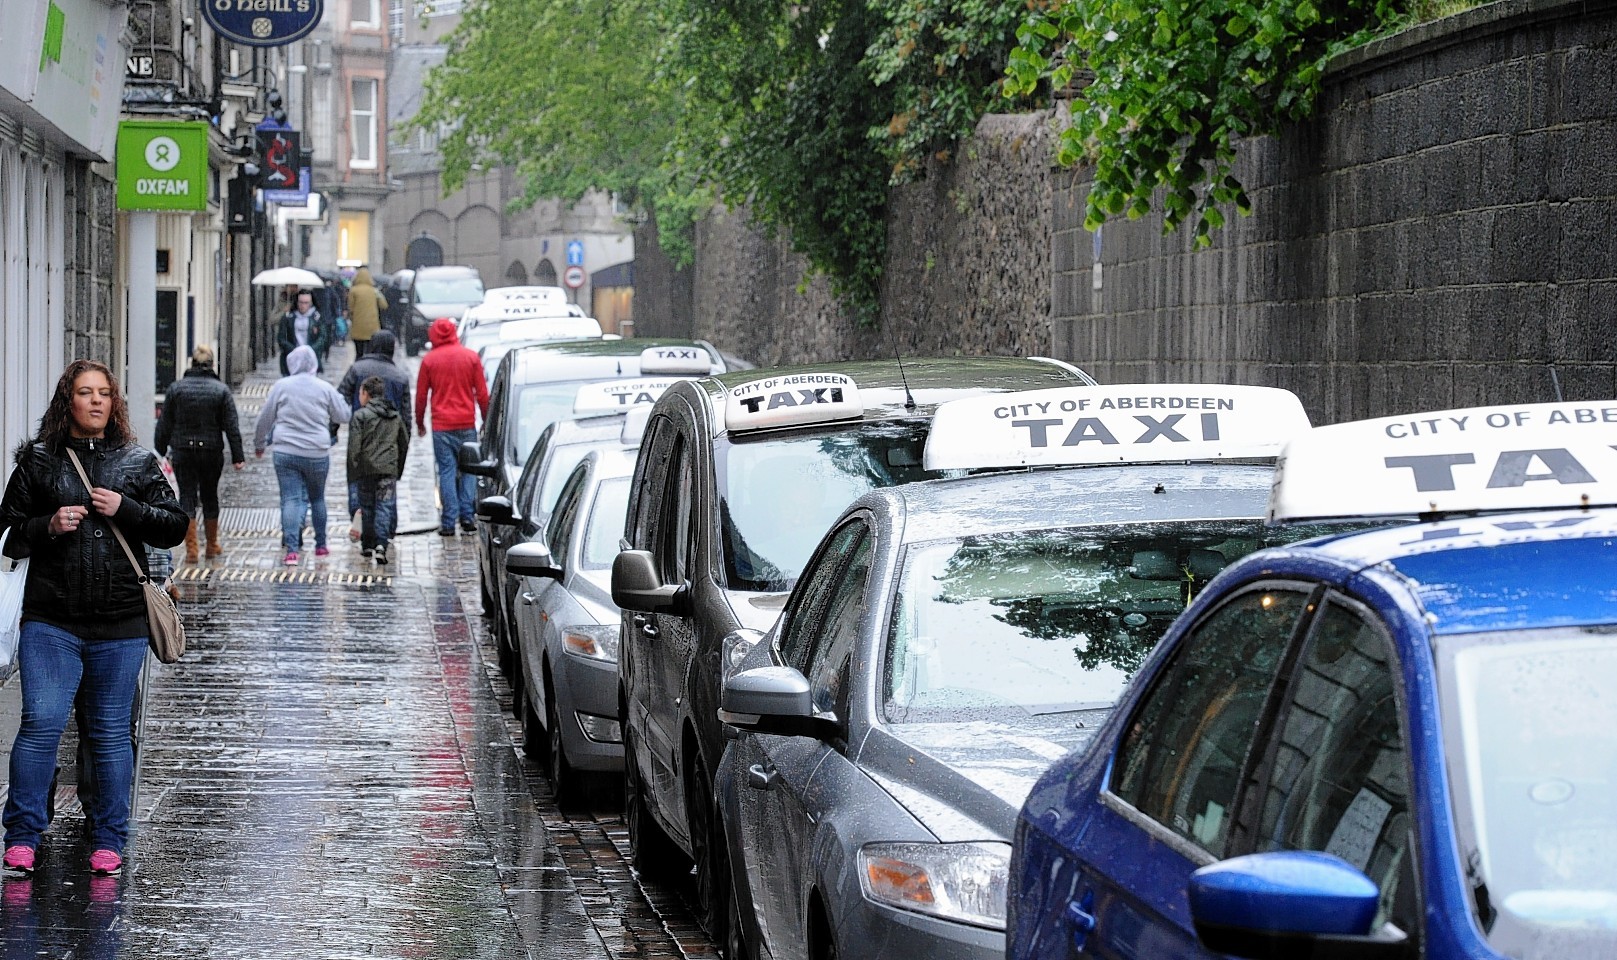 Back Wynd Taxi rank in Aberdeen.